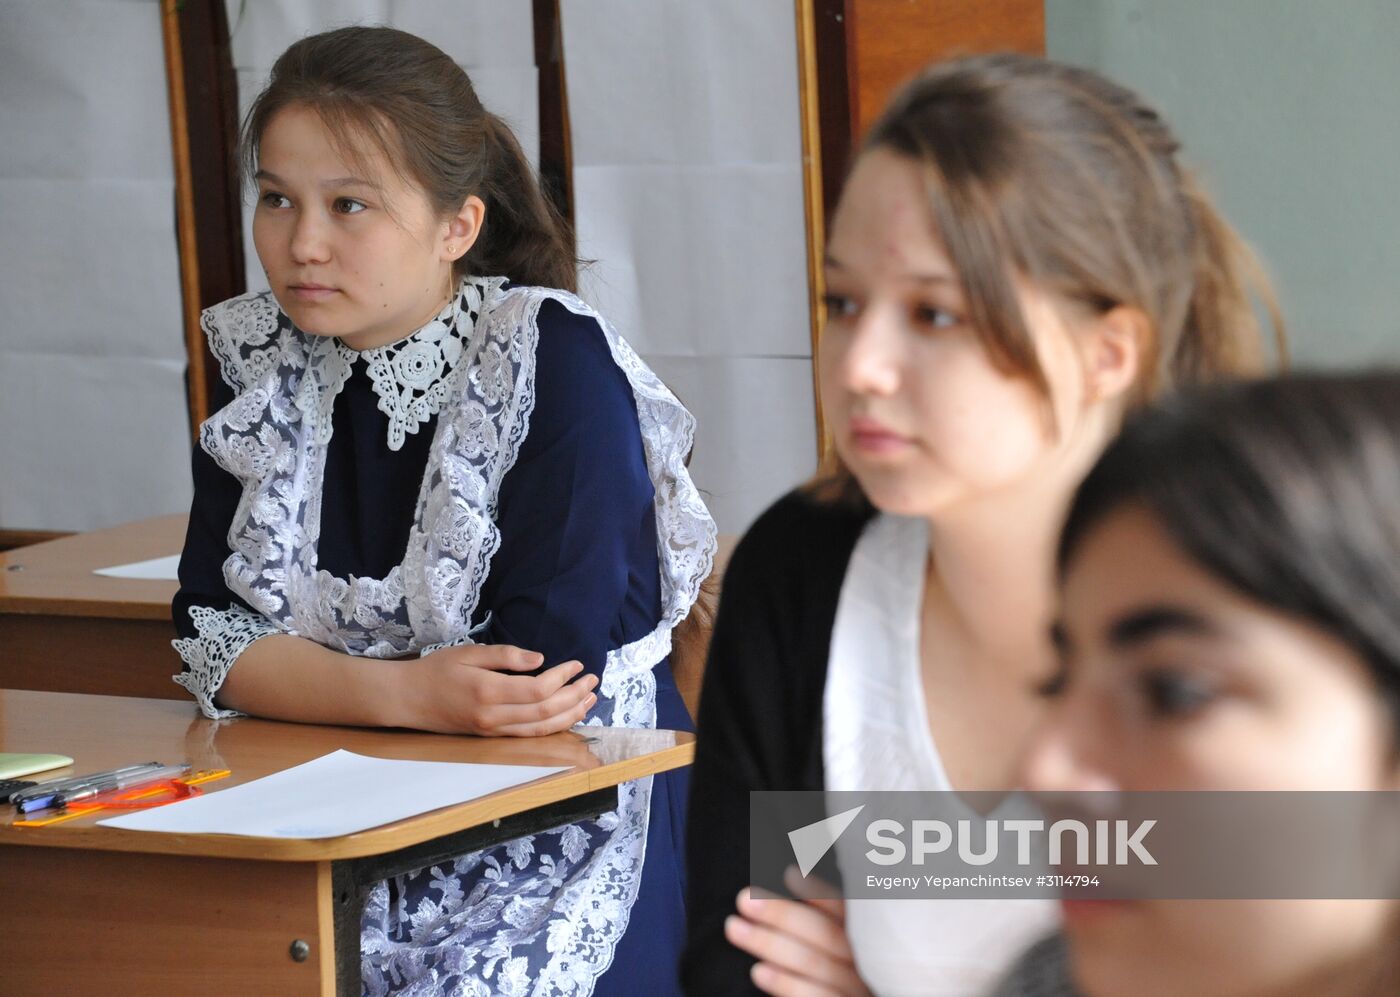 Russian schoolchildren take Unified State Exam